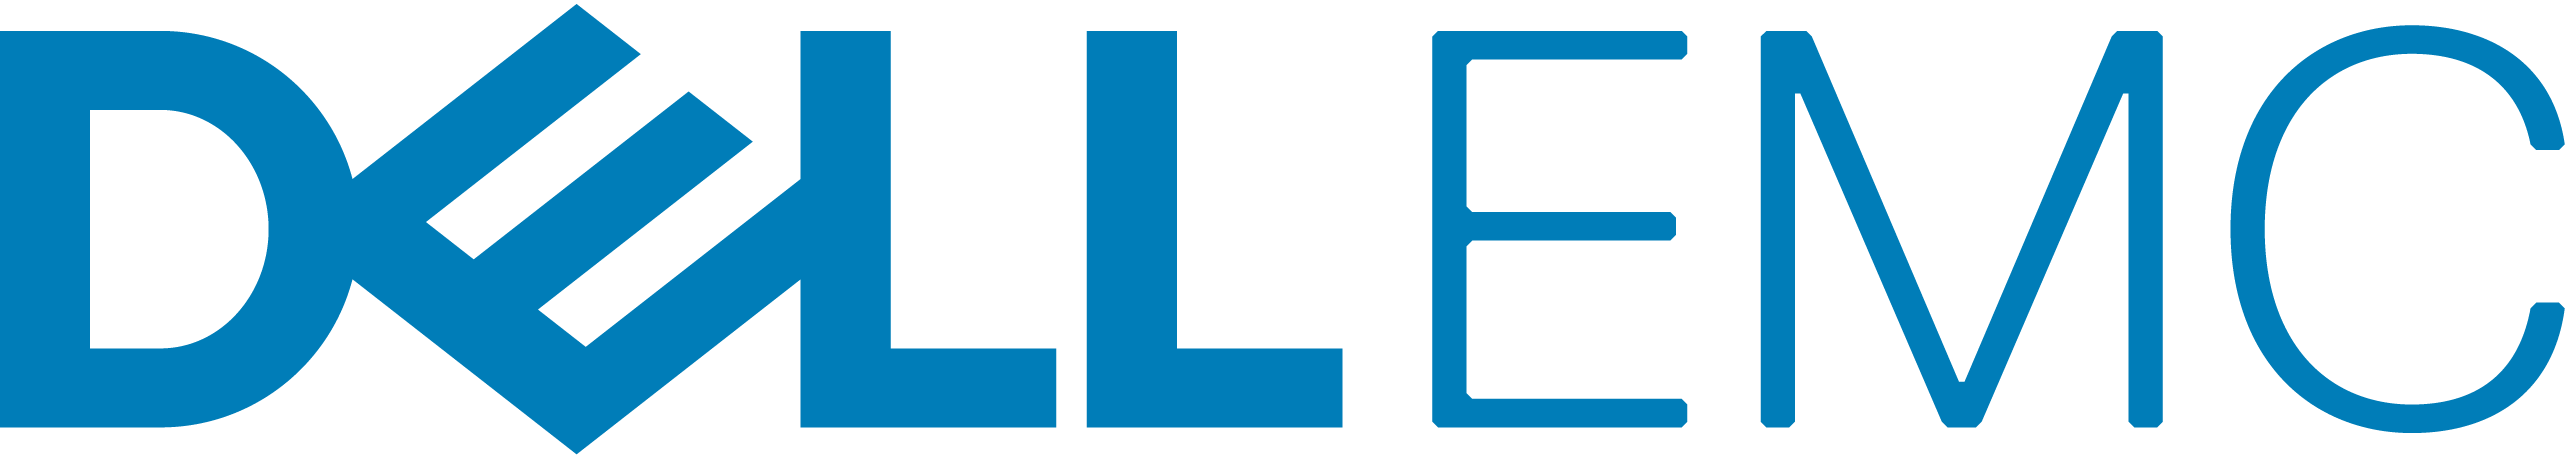 DellEMC Logo Prm Blue Rgb